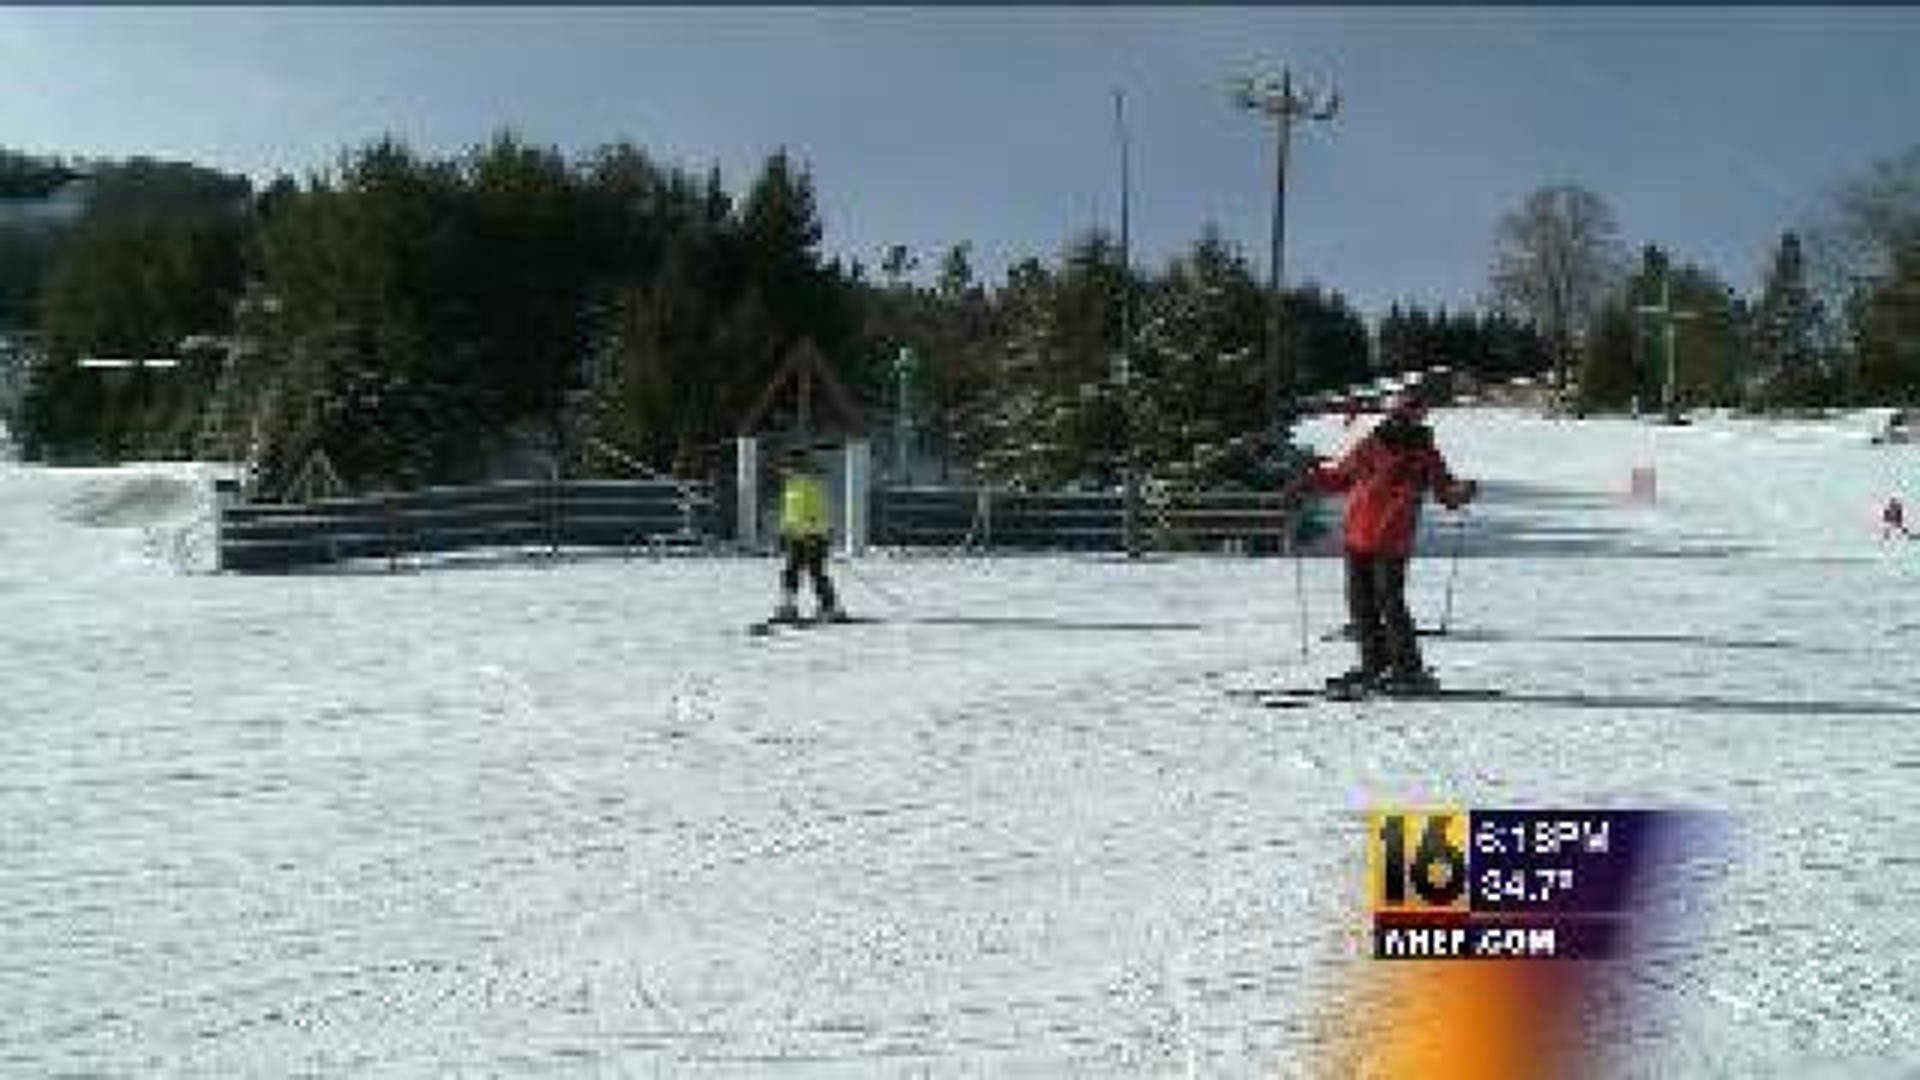 Skiers Hitting Slopes For Holidays